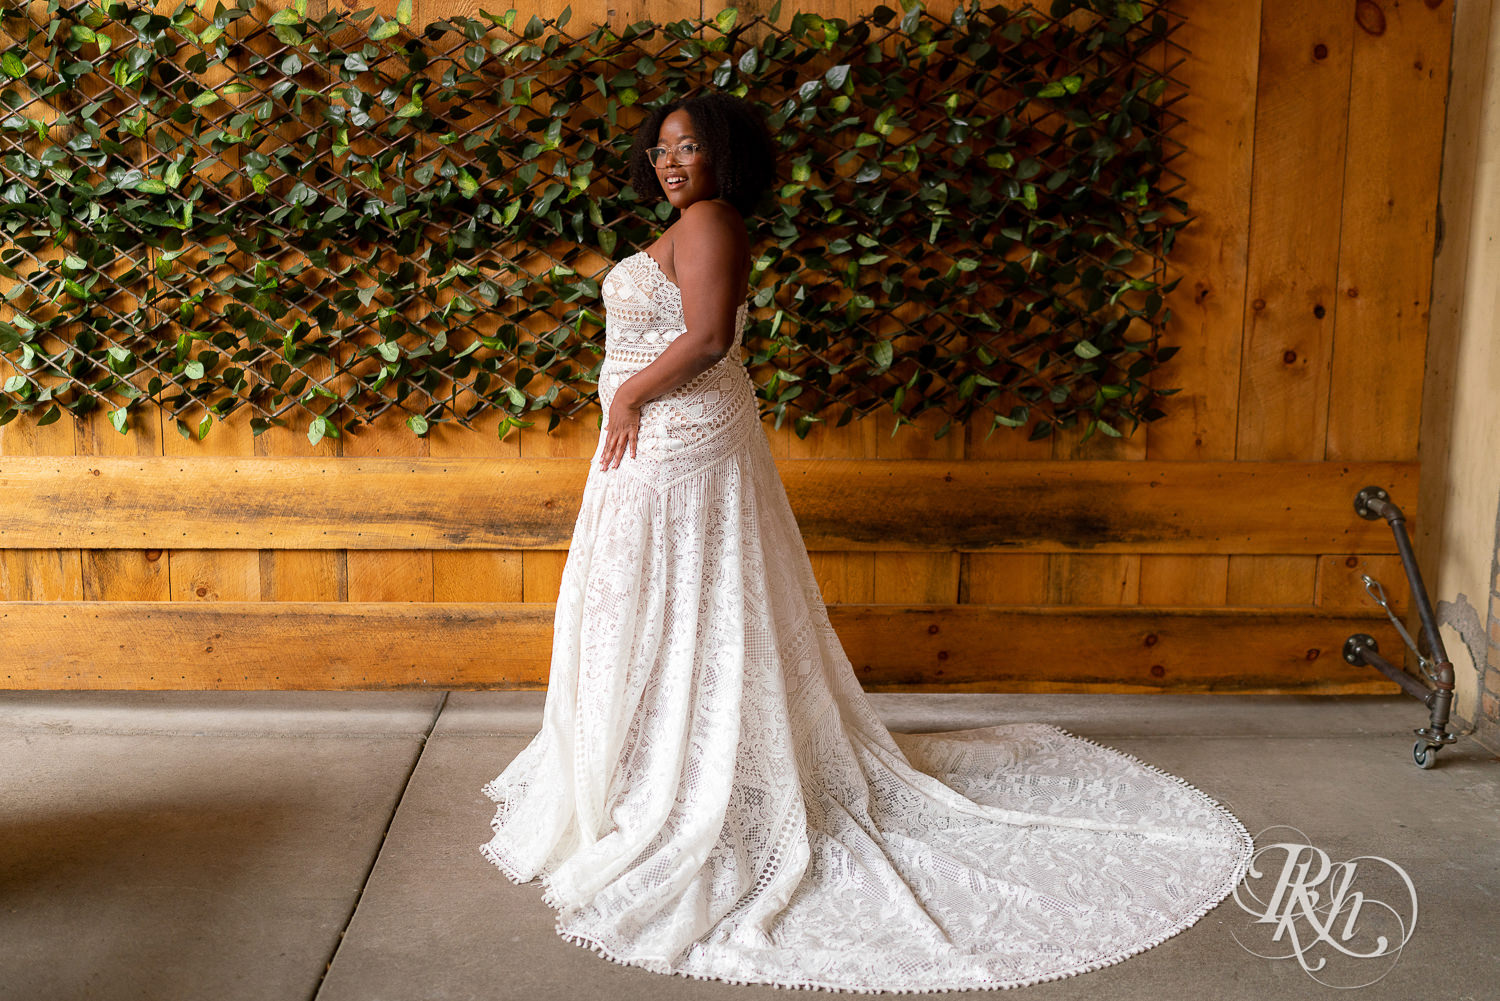 Black plus size bride looking over shoulder in wedding dresses in Minneapolis, Minnesota.